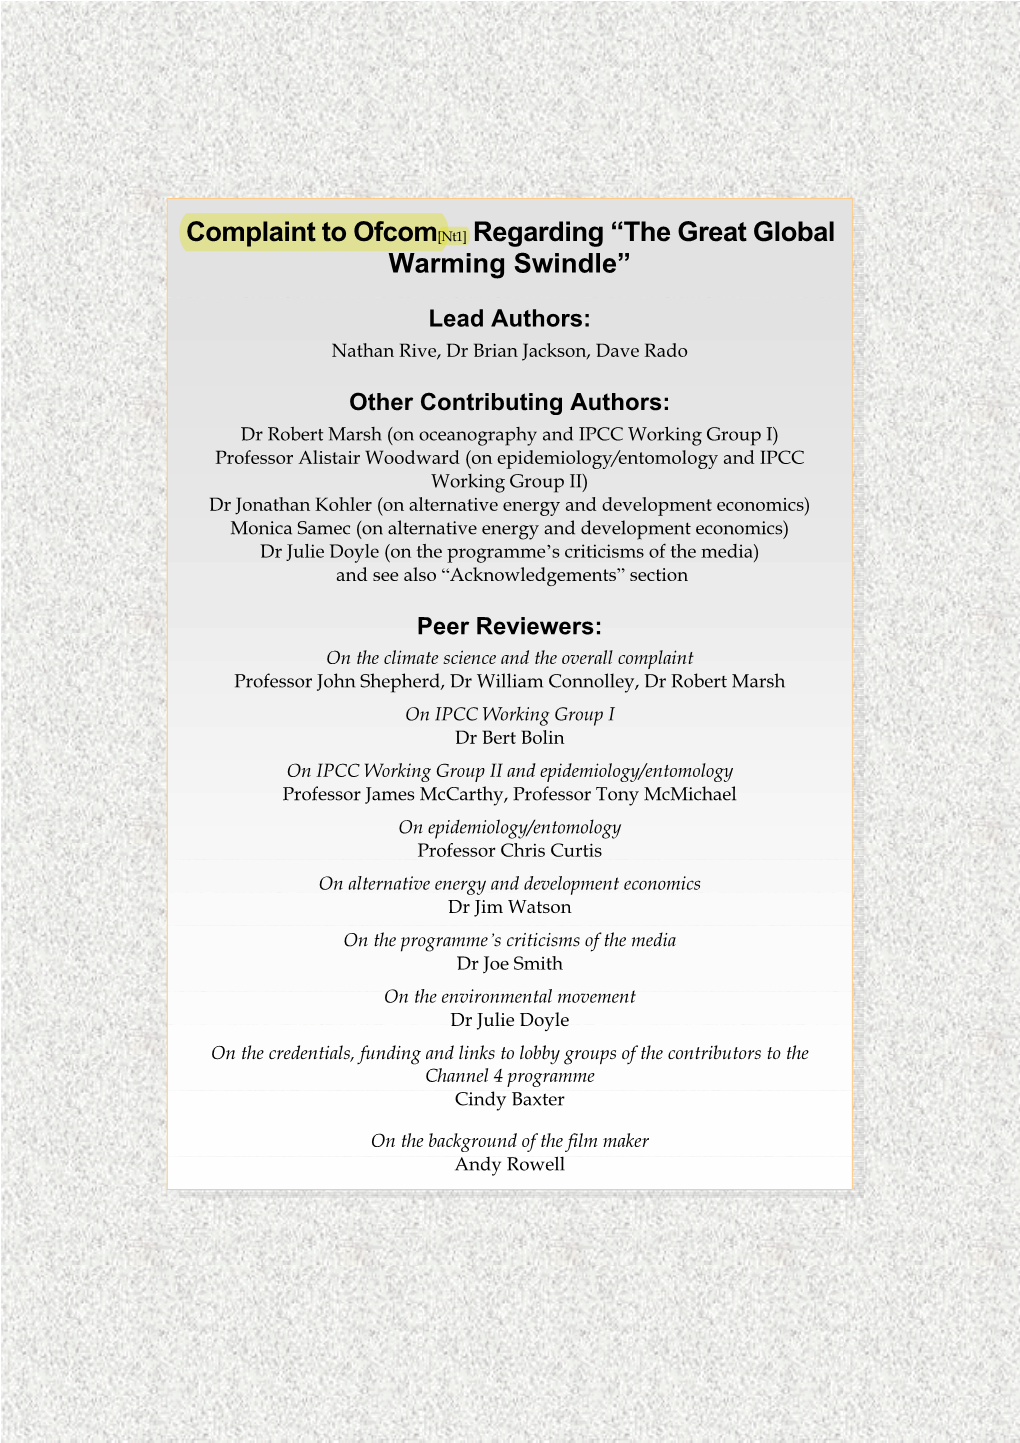 [PDF] Complaint to Ofcom Regarding “The Great Global Warming Swindle”